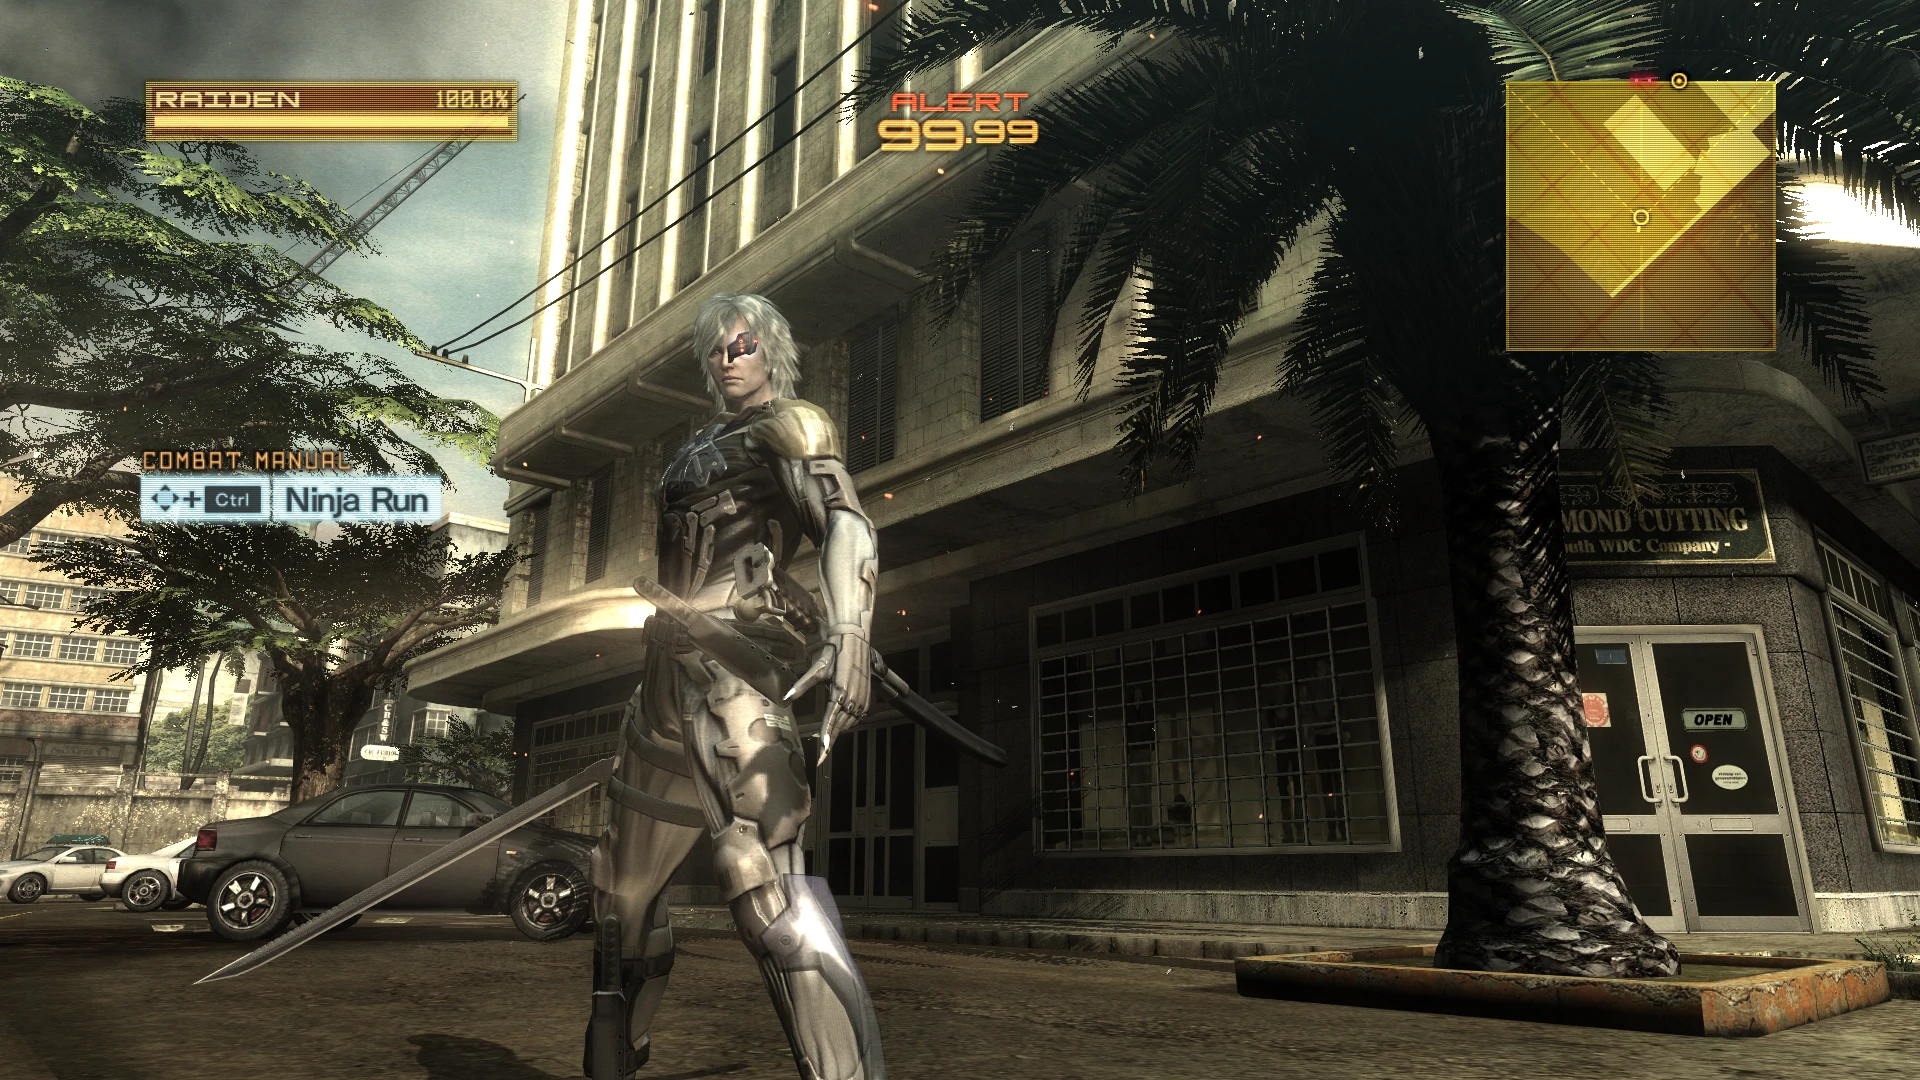 Sam S Sheathe At Metal Gear Rising Revengeance Nexus Mods And Community